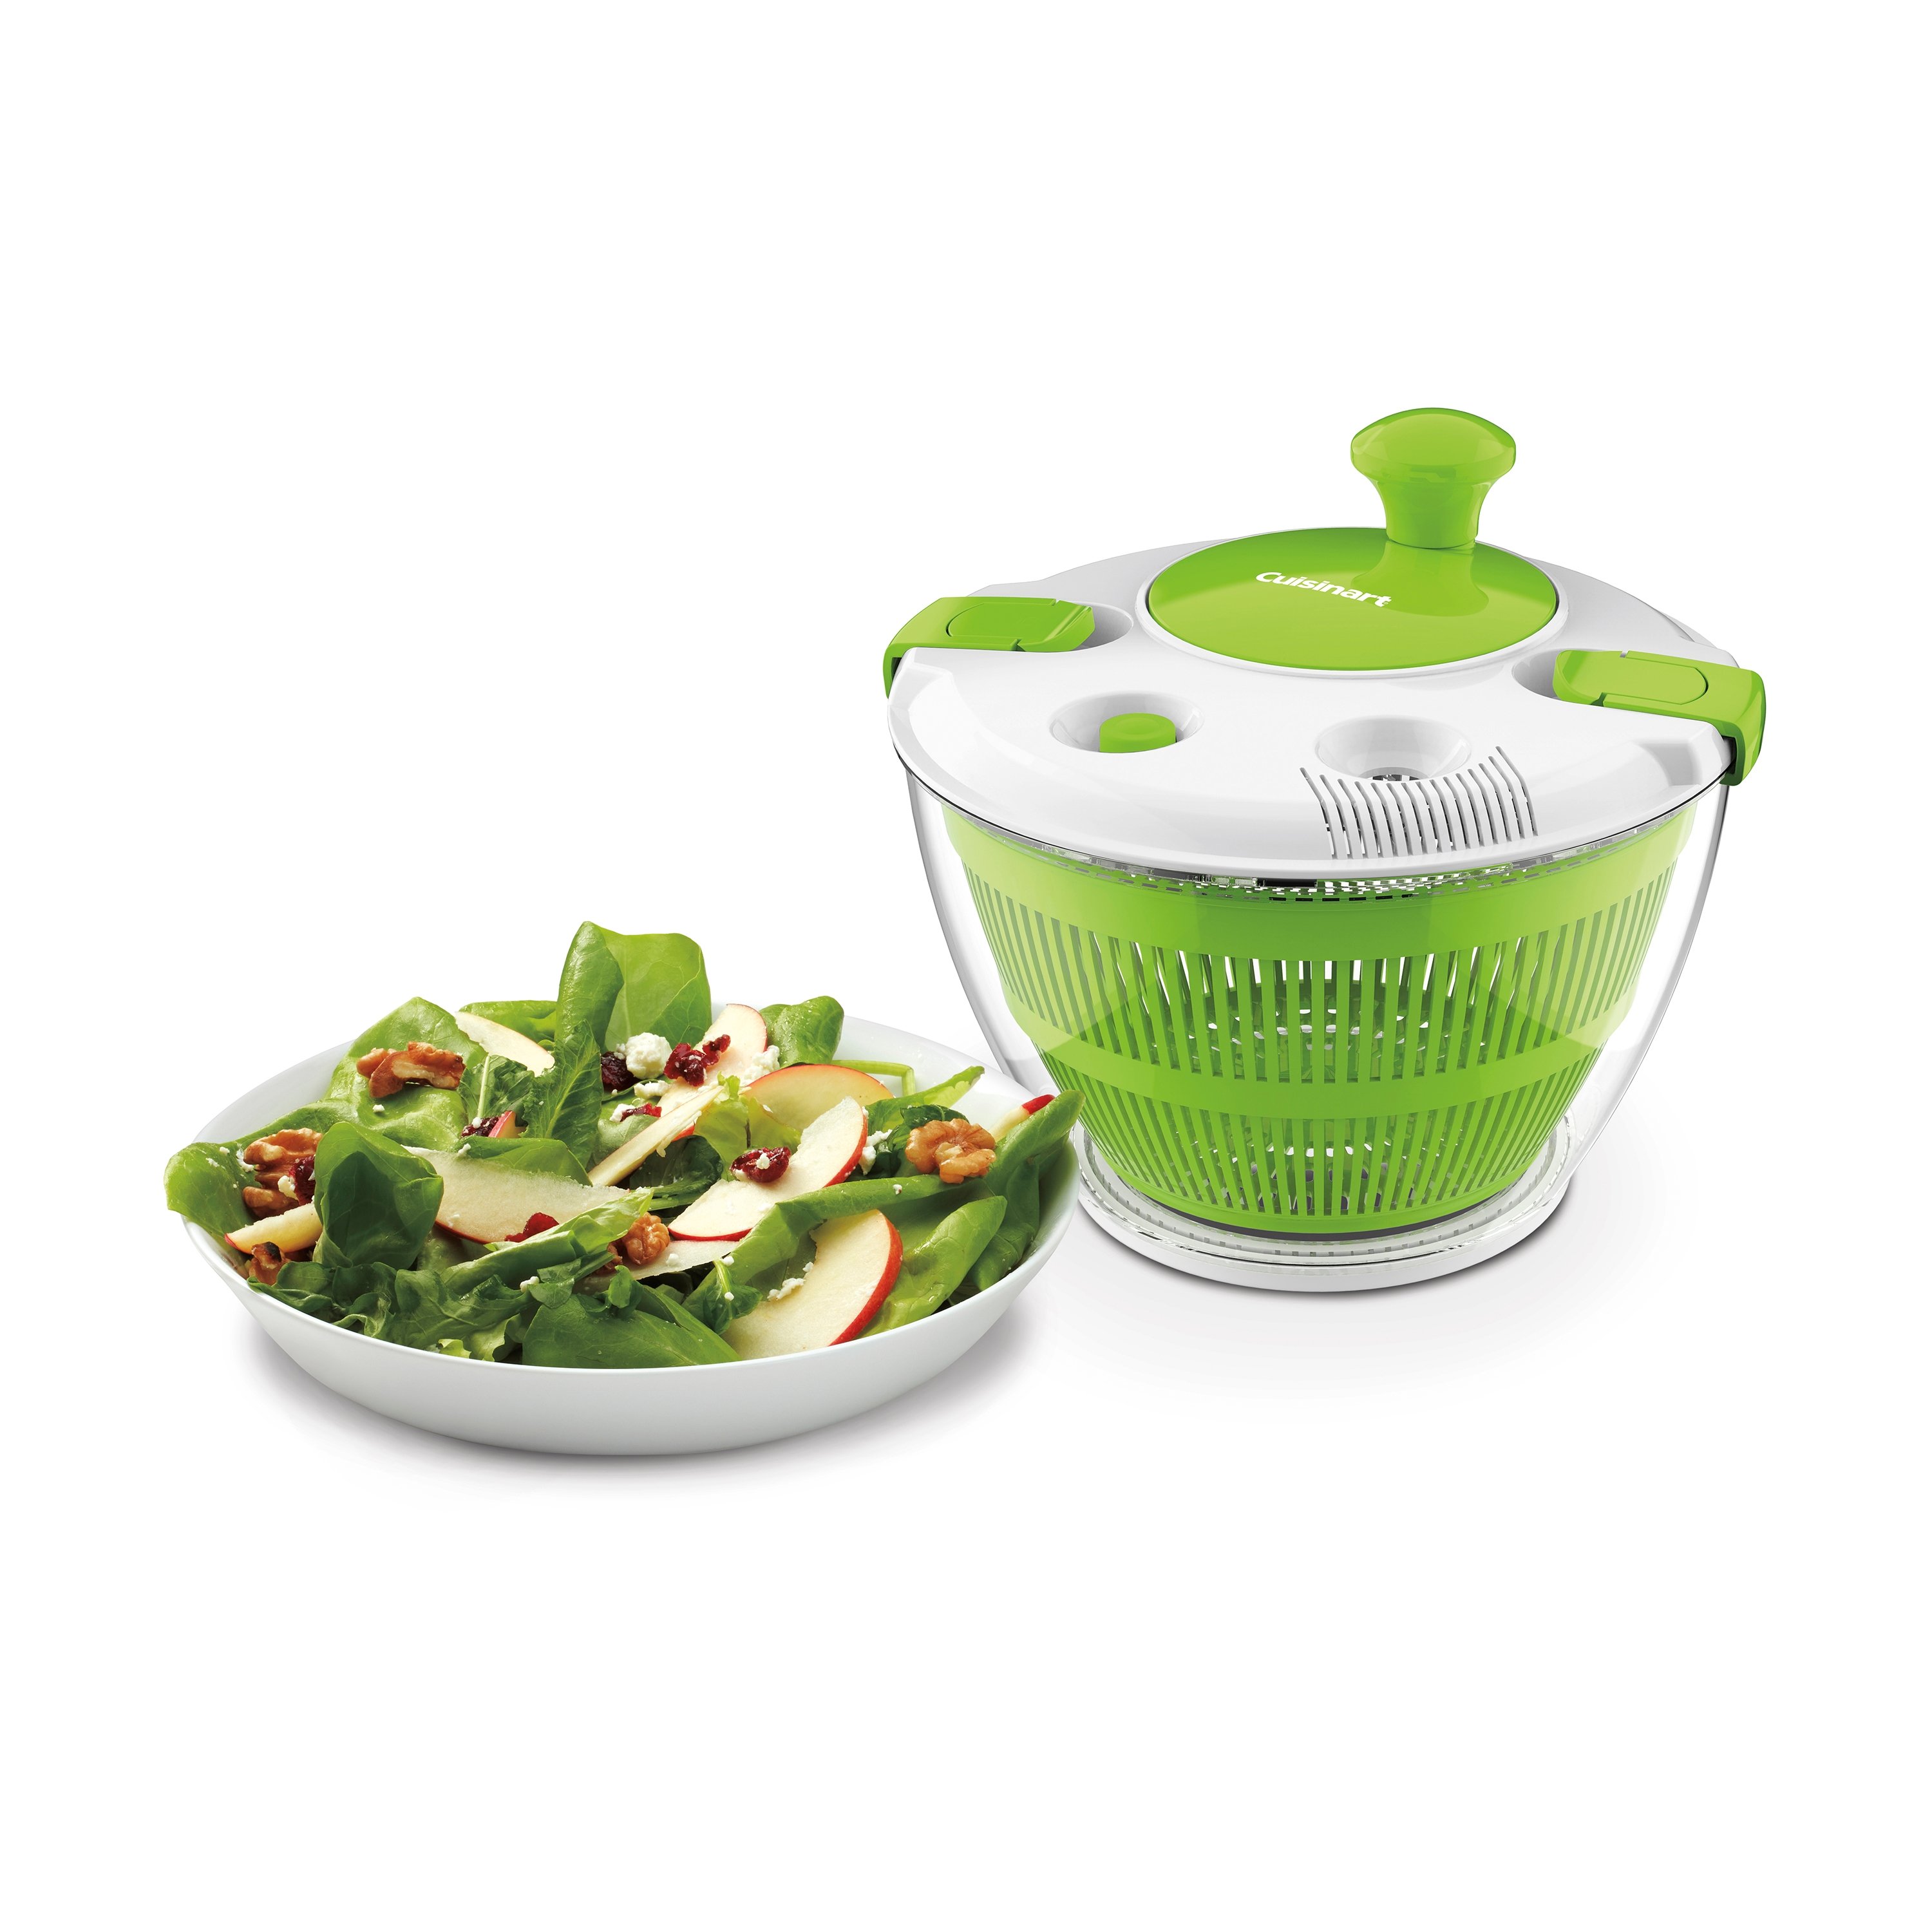  Cuisinart Salad Spinner- Wash, Spin & Dry Salad Greens